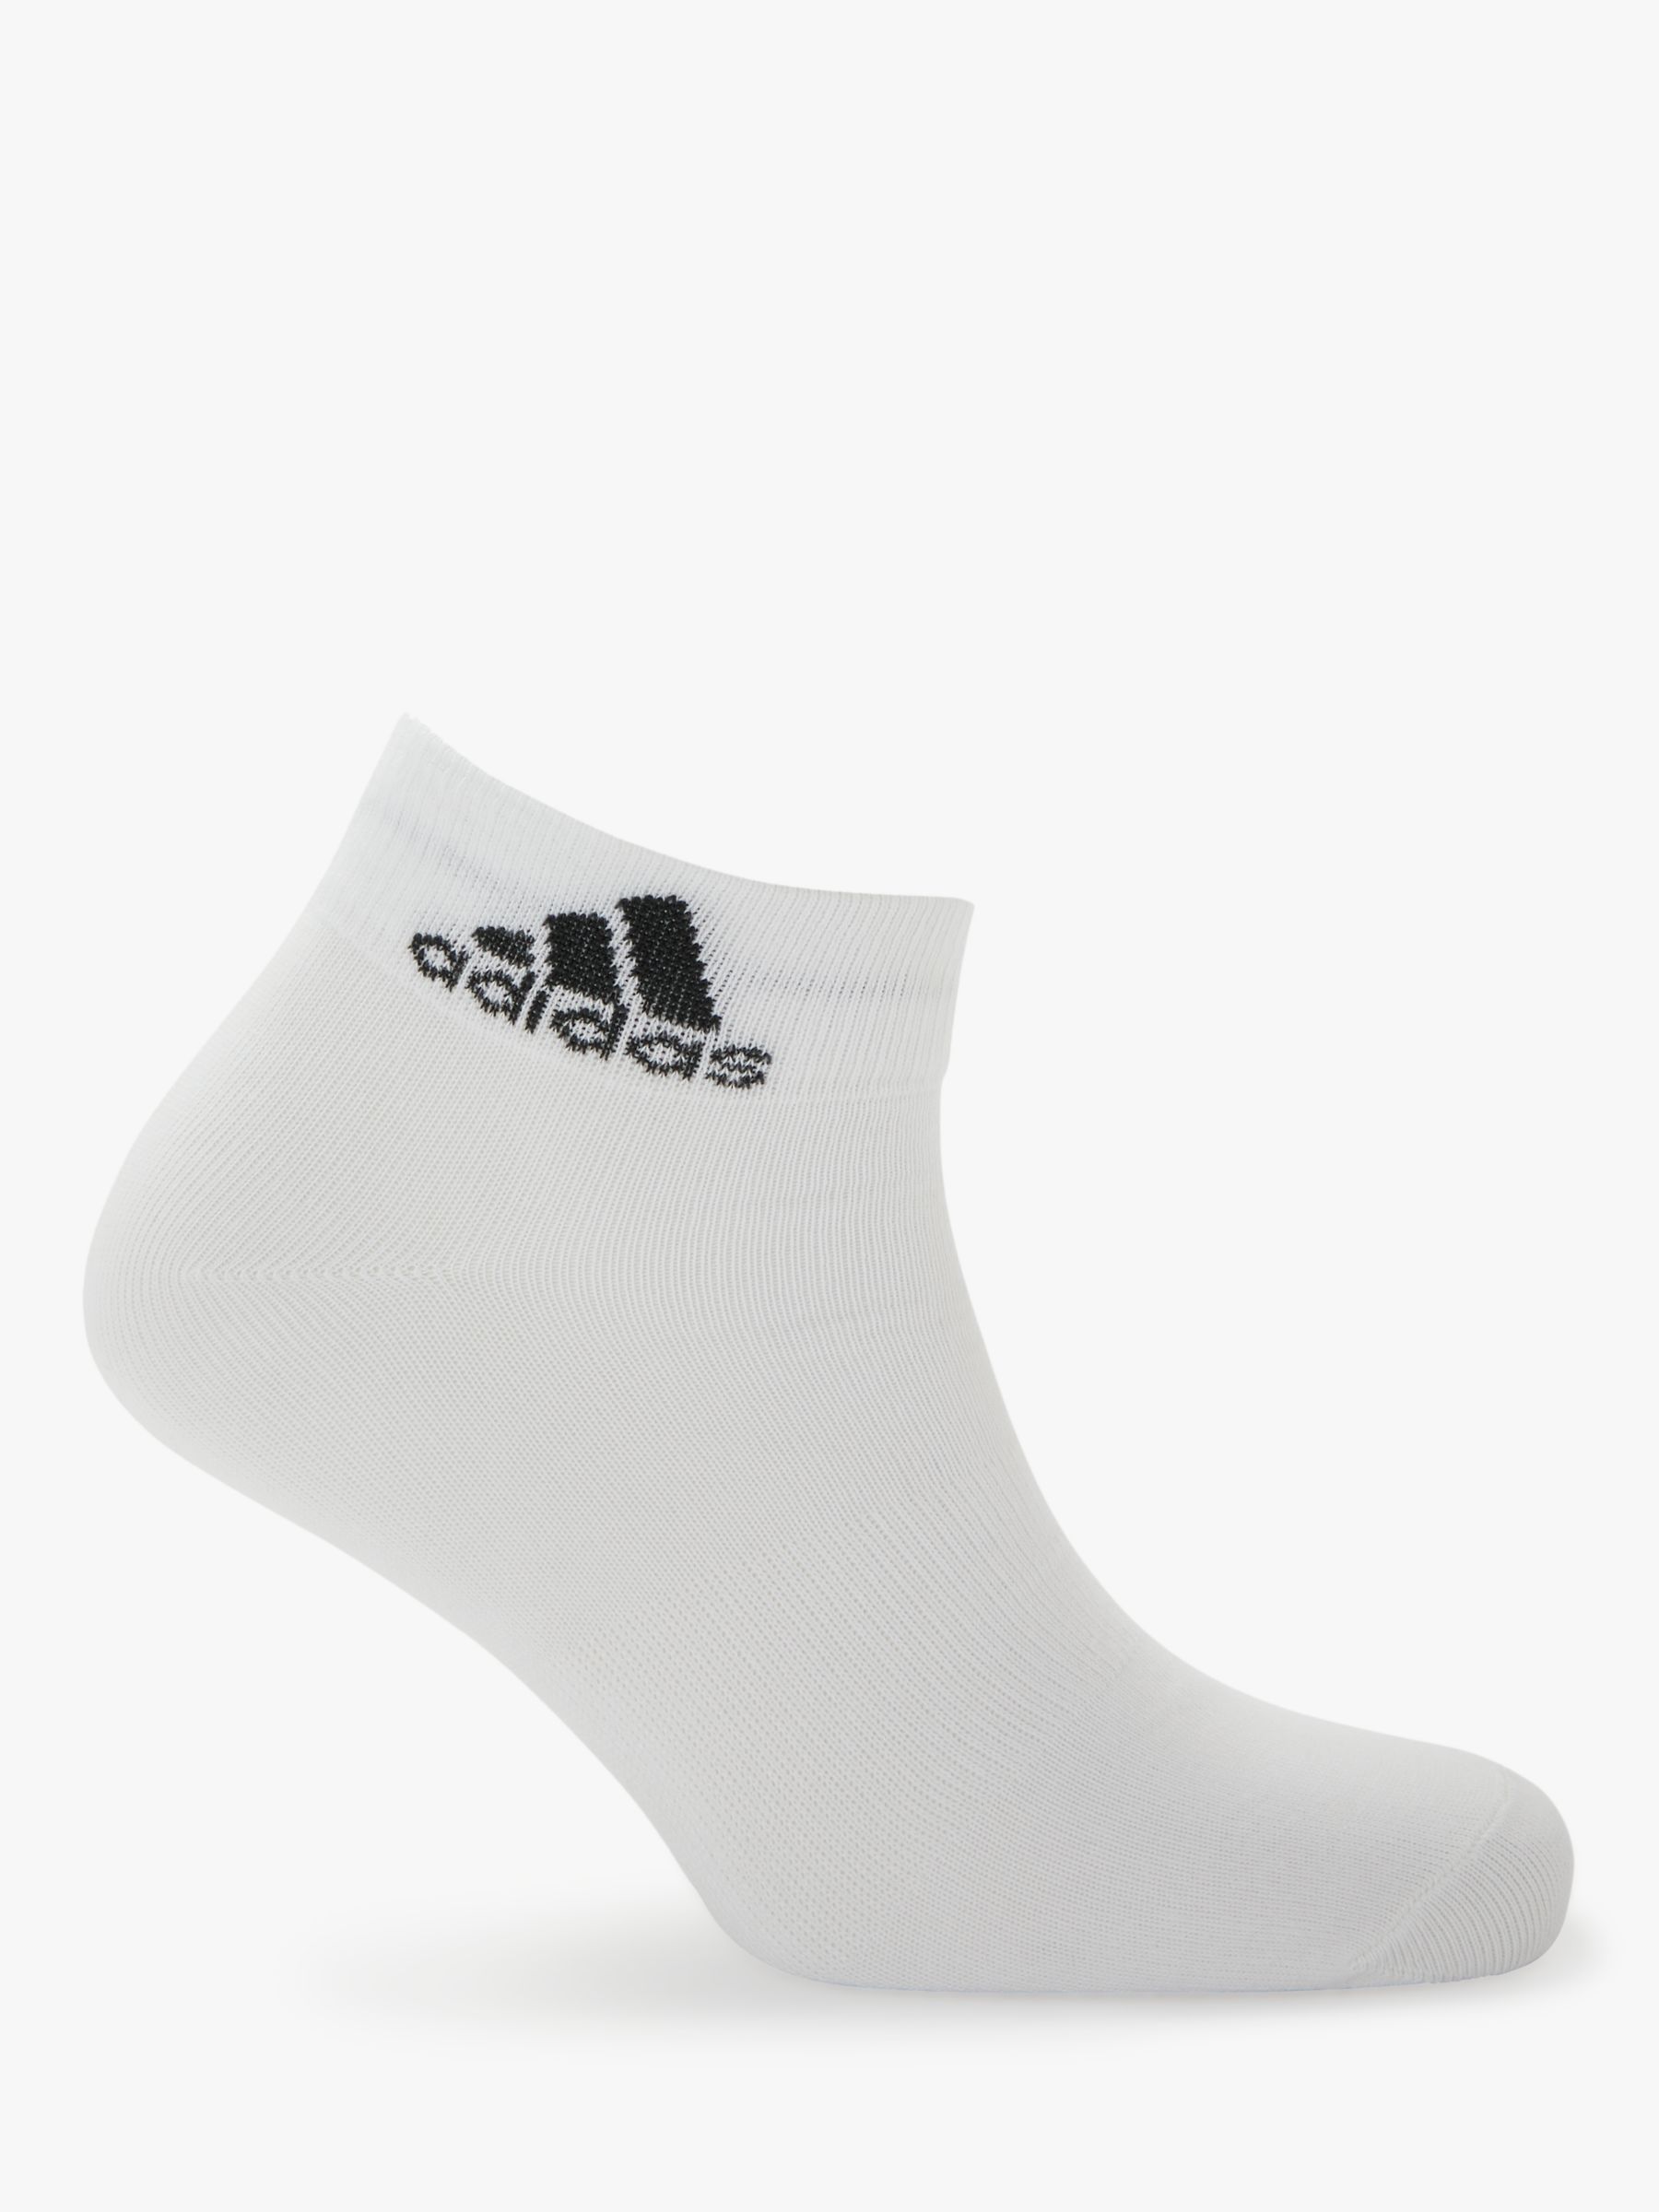 adidas white ankle socks